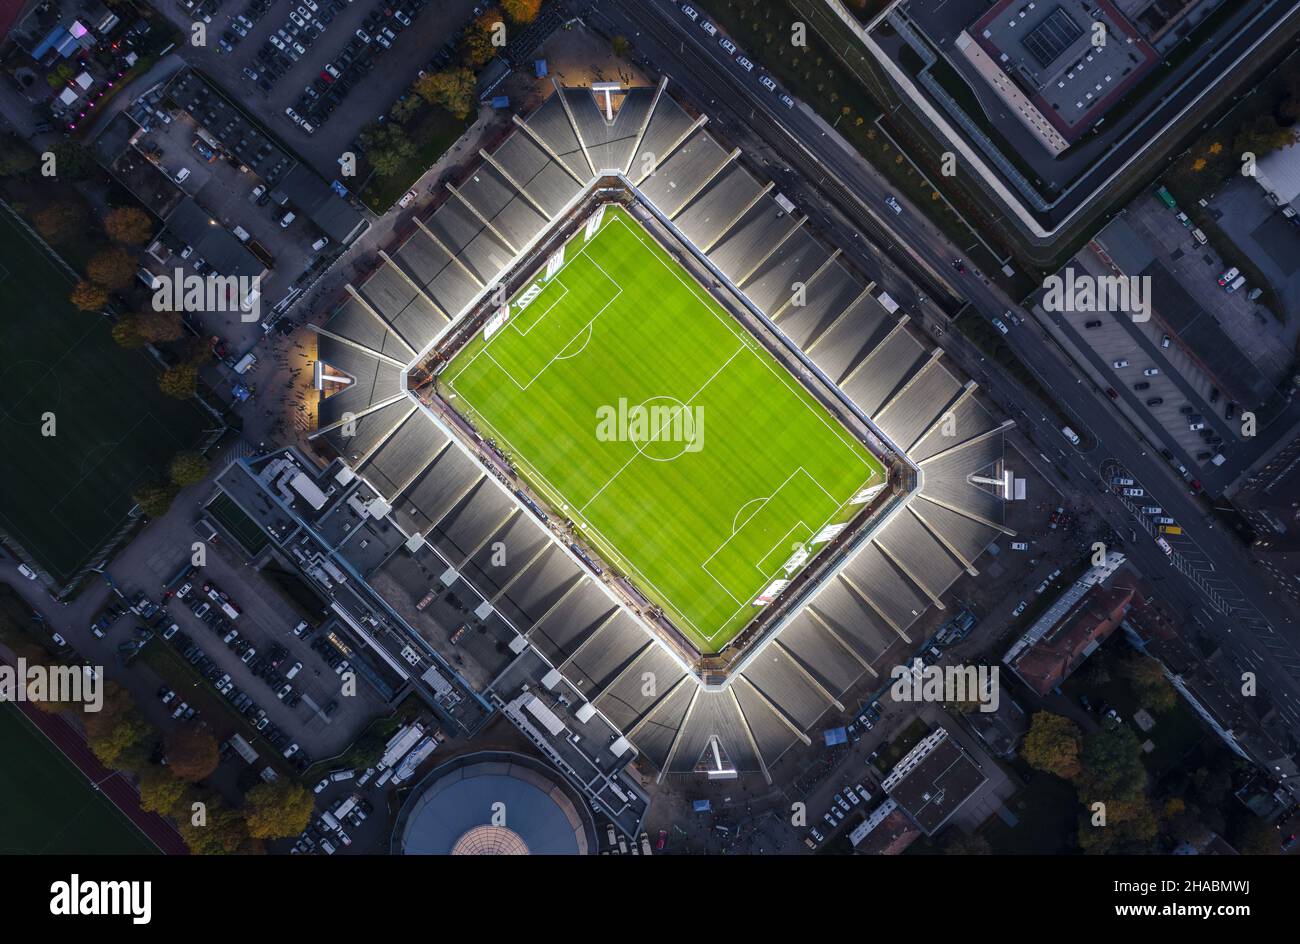 Vonovia Ruhrstadion. Home stadium for VFL Bochum. Germany - October 2021 Stock Photo